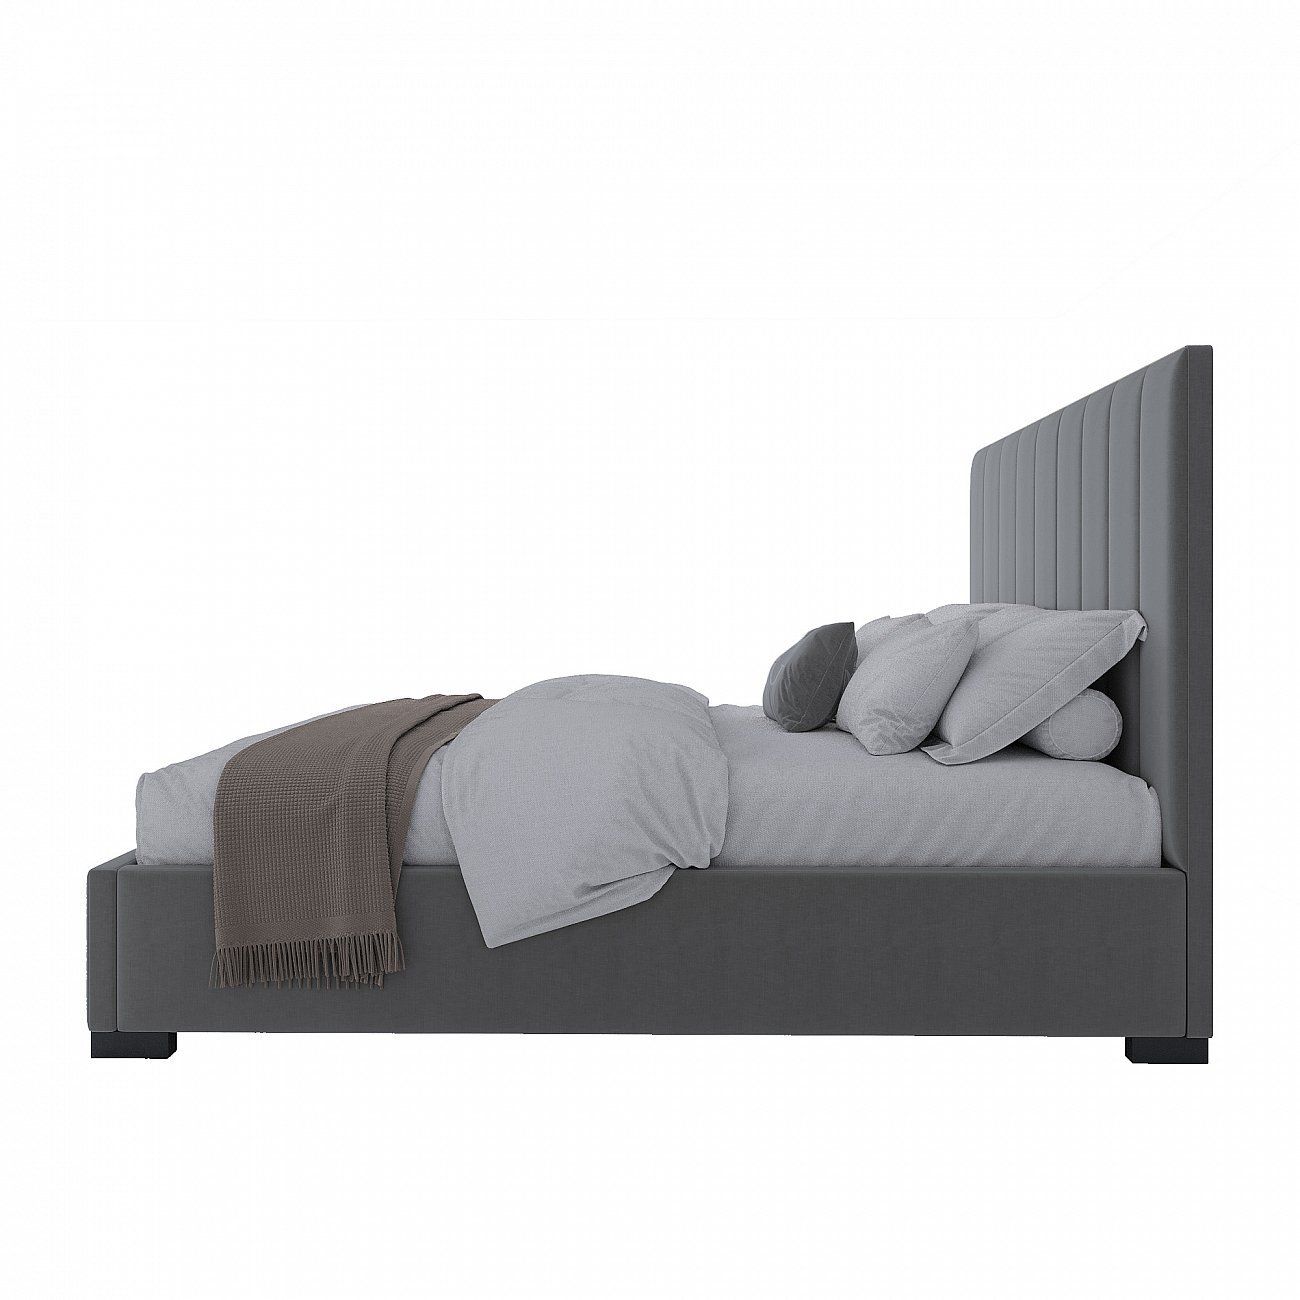 Double bed 180x200 light grey Luna P